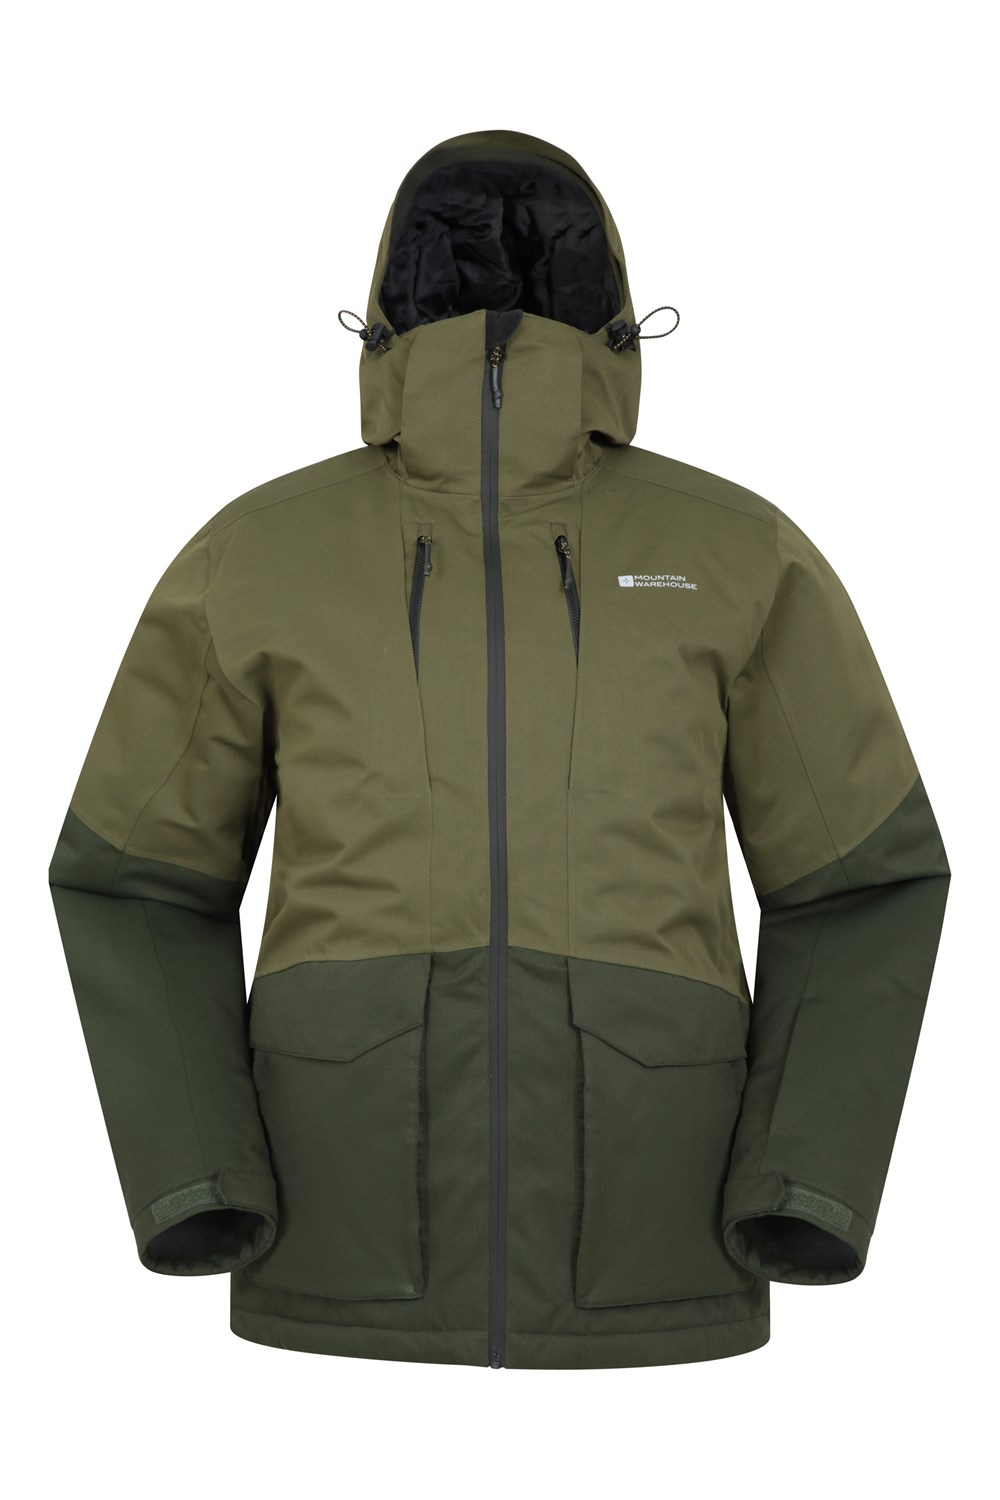 Mountain Warehouse Interstellar Men's Ski Jacket Waterproof Padded Warm ...